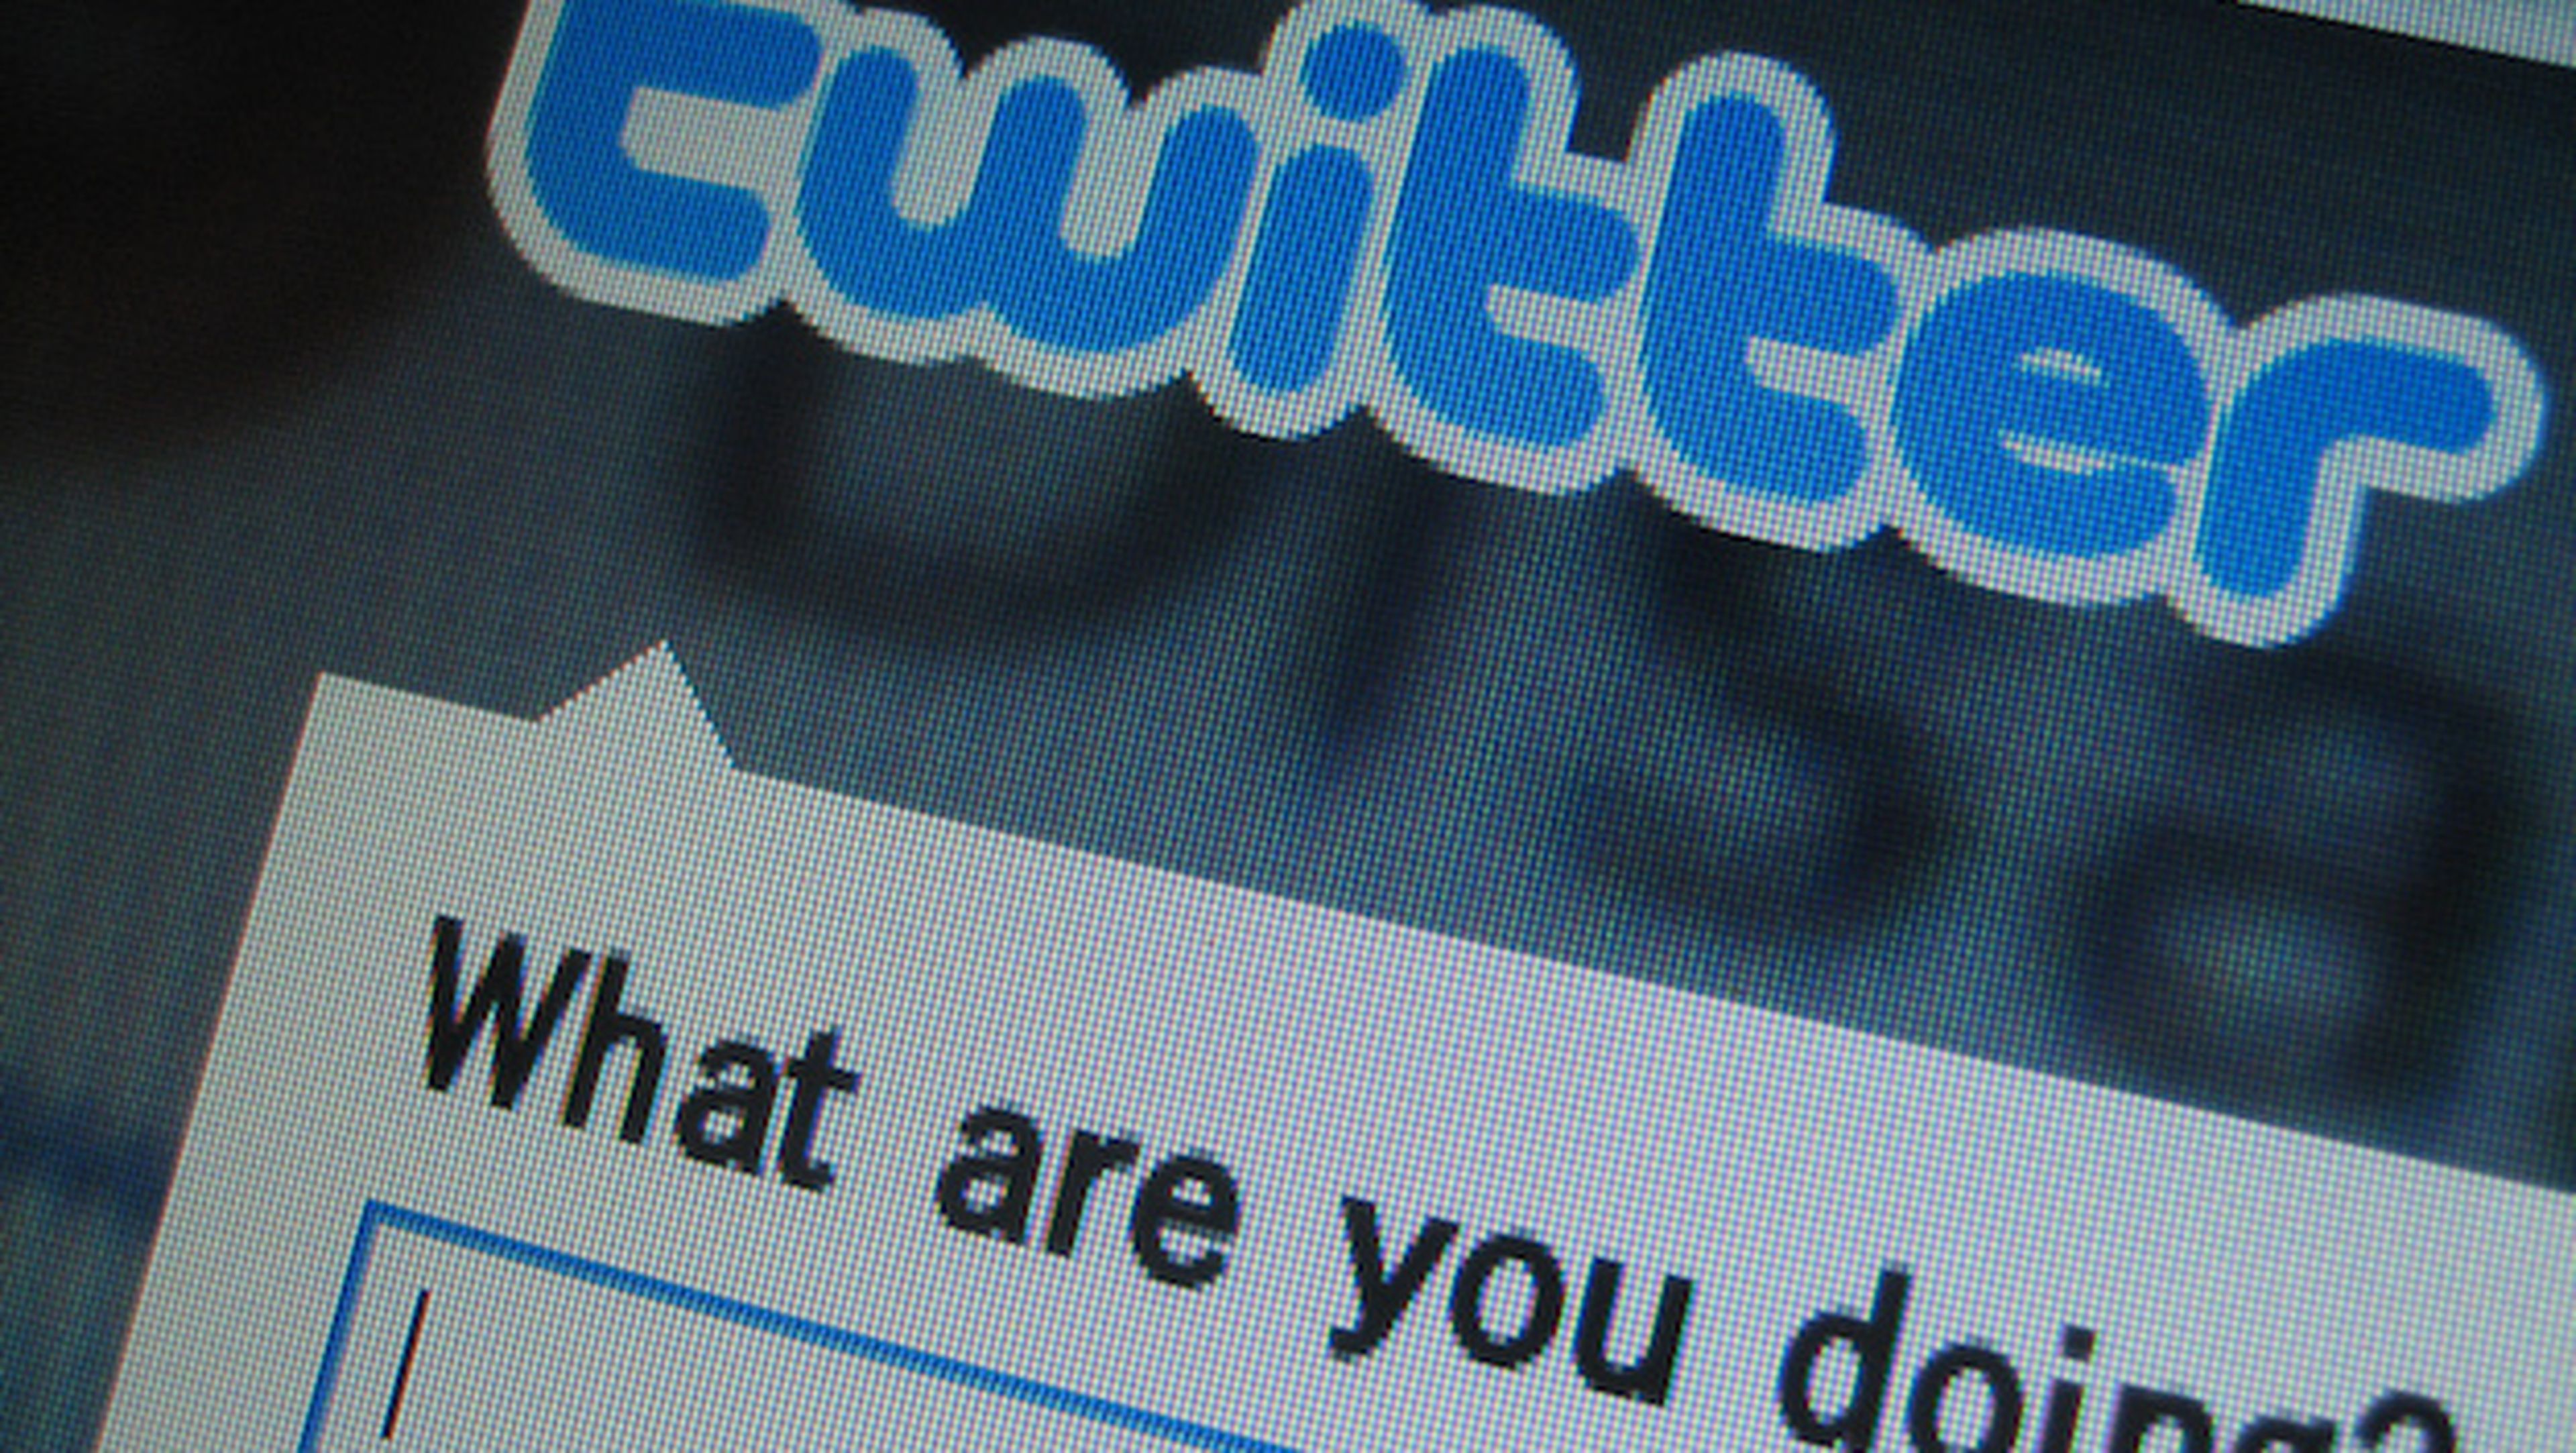 Twitter planea un despido masivo para las próximas semanas